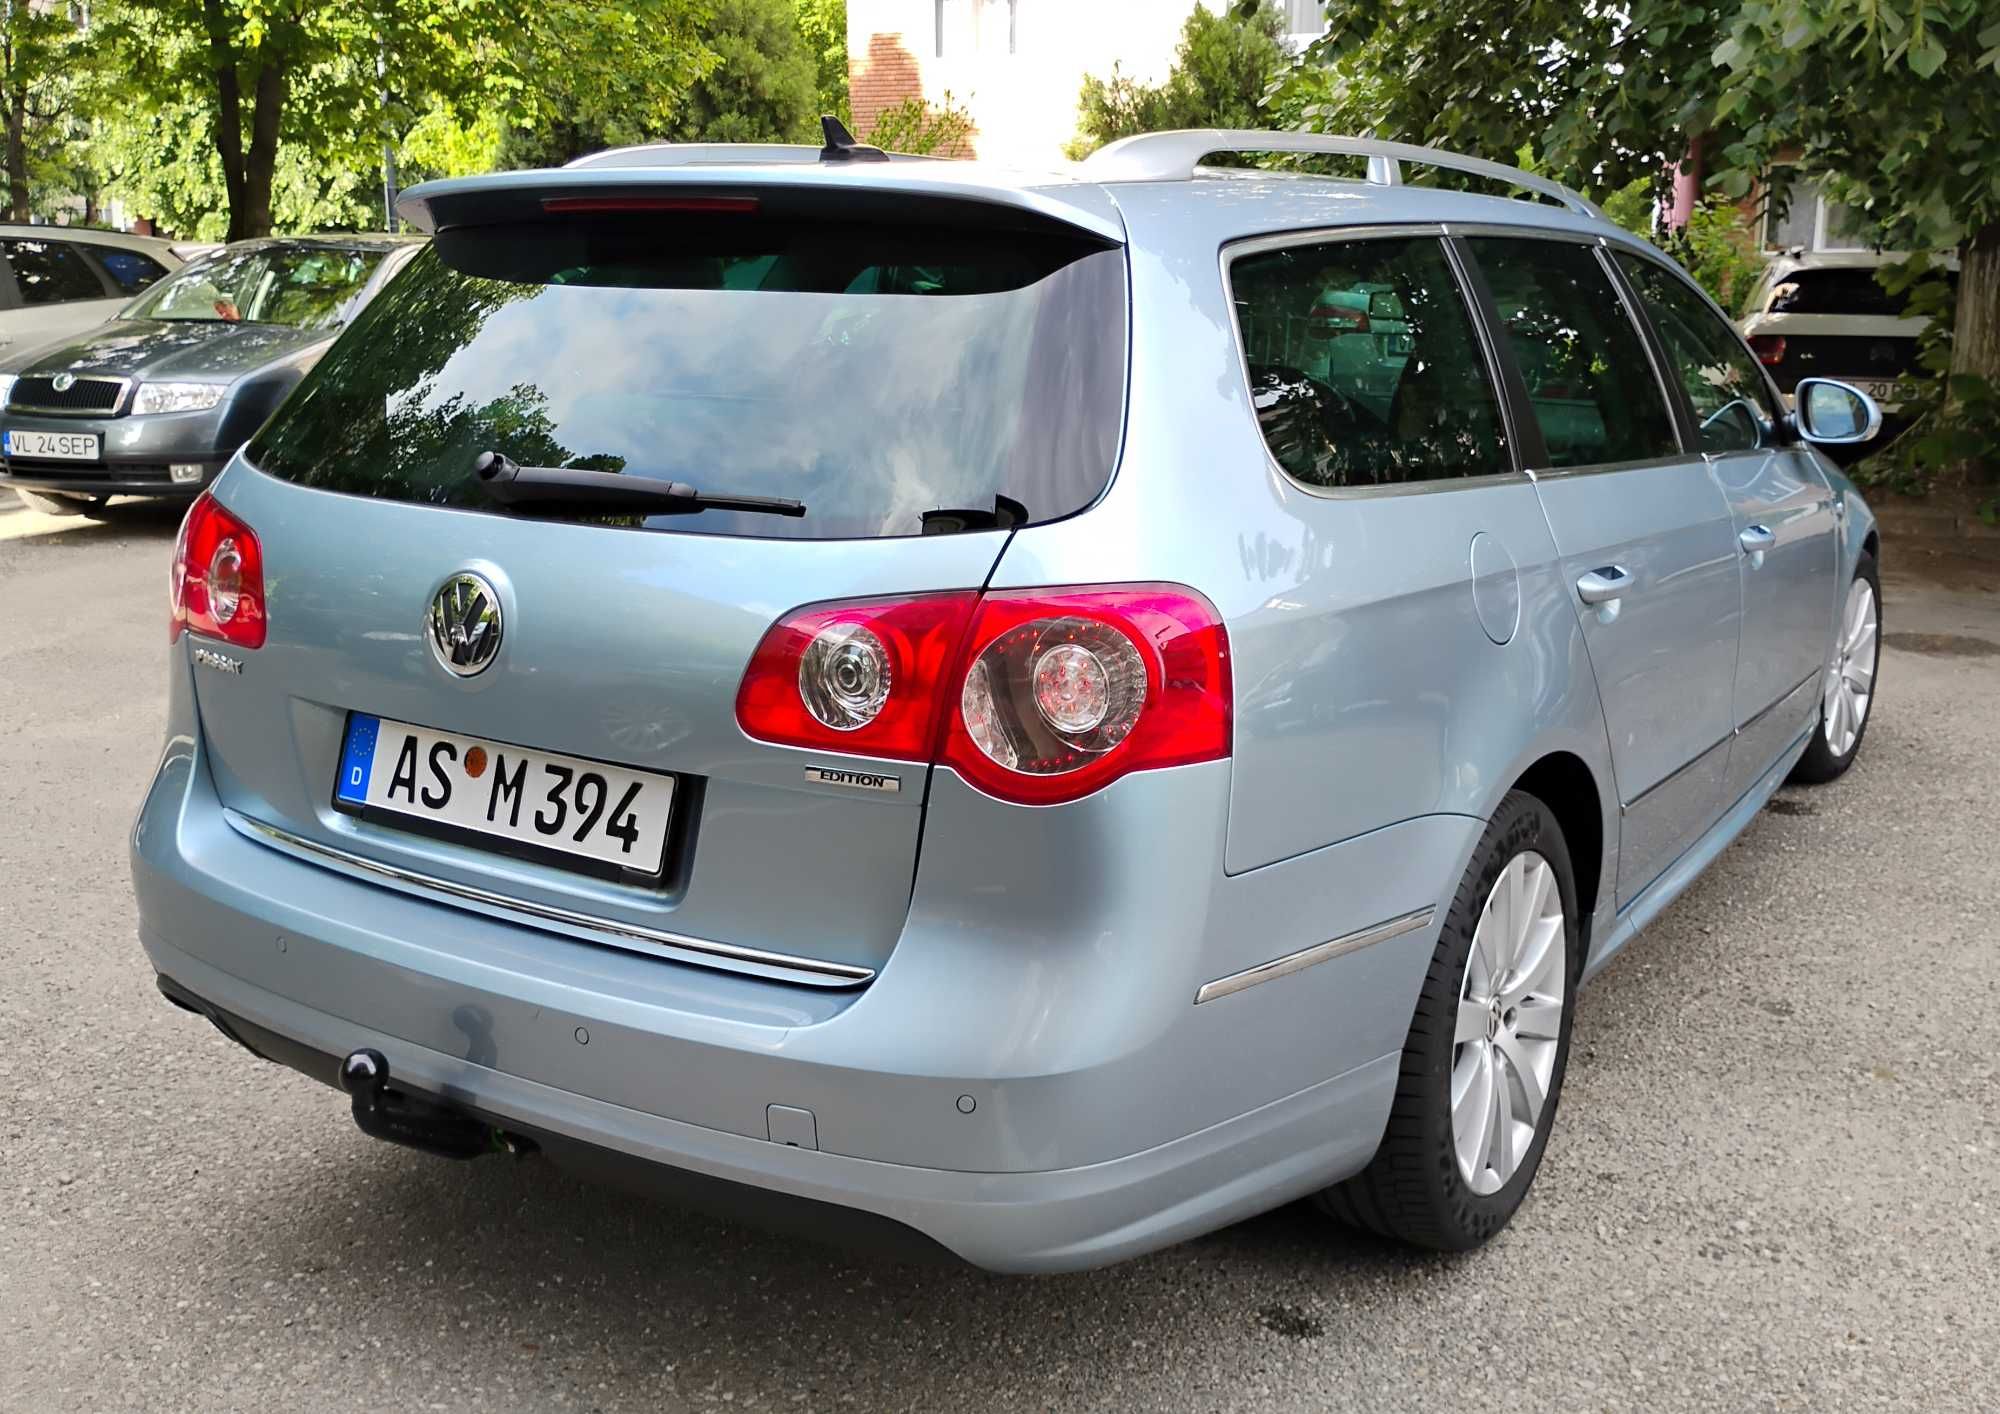 Volkswagen Passat, 4MOTION, Rline, EURO5